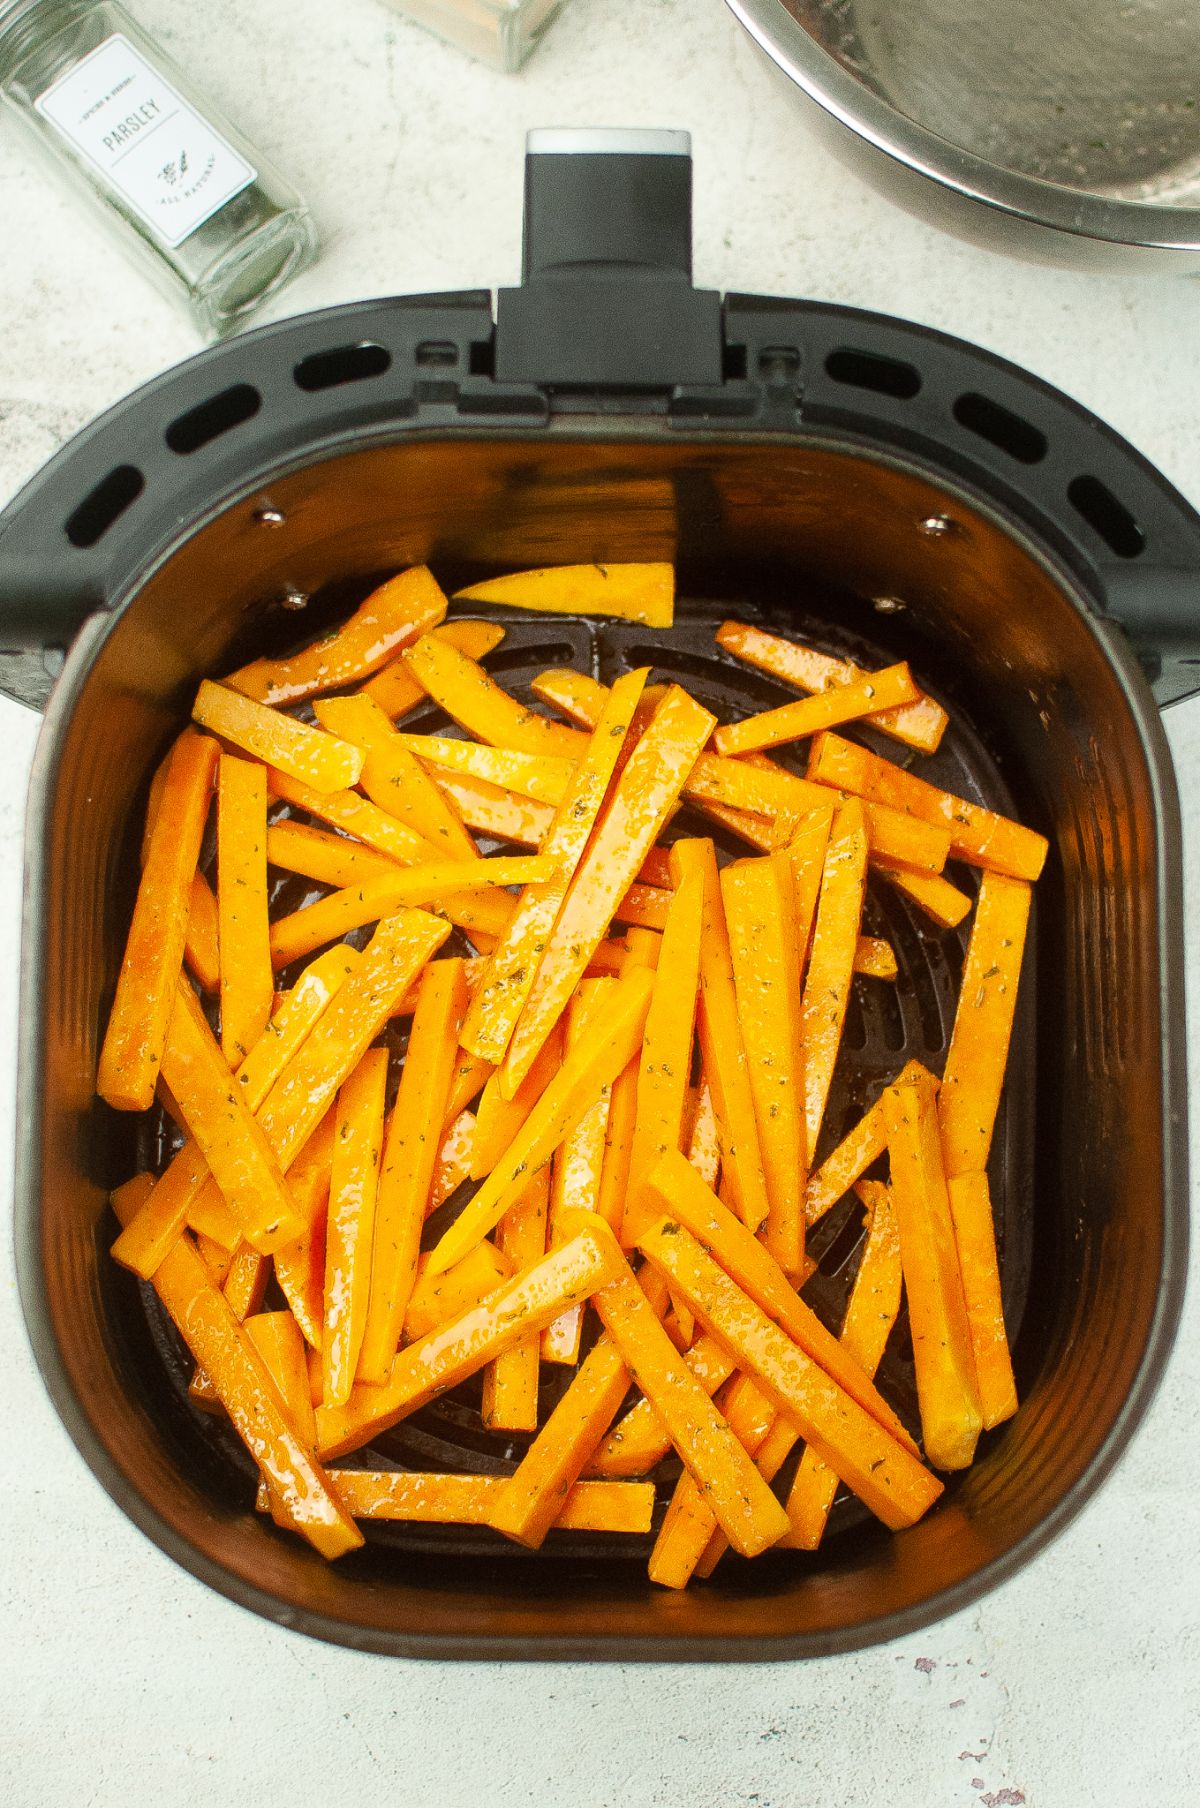 Squash fries in the air fryer basket.